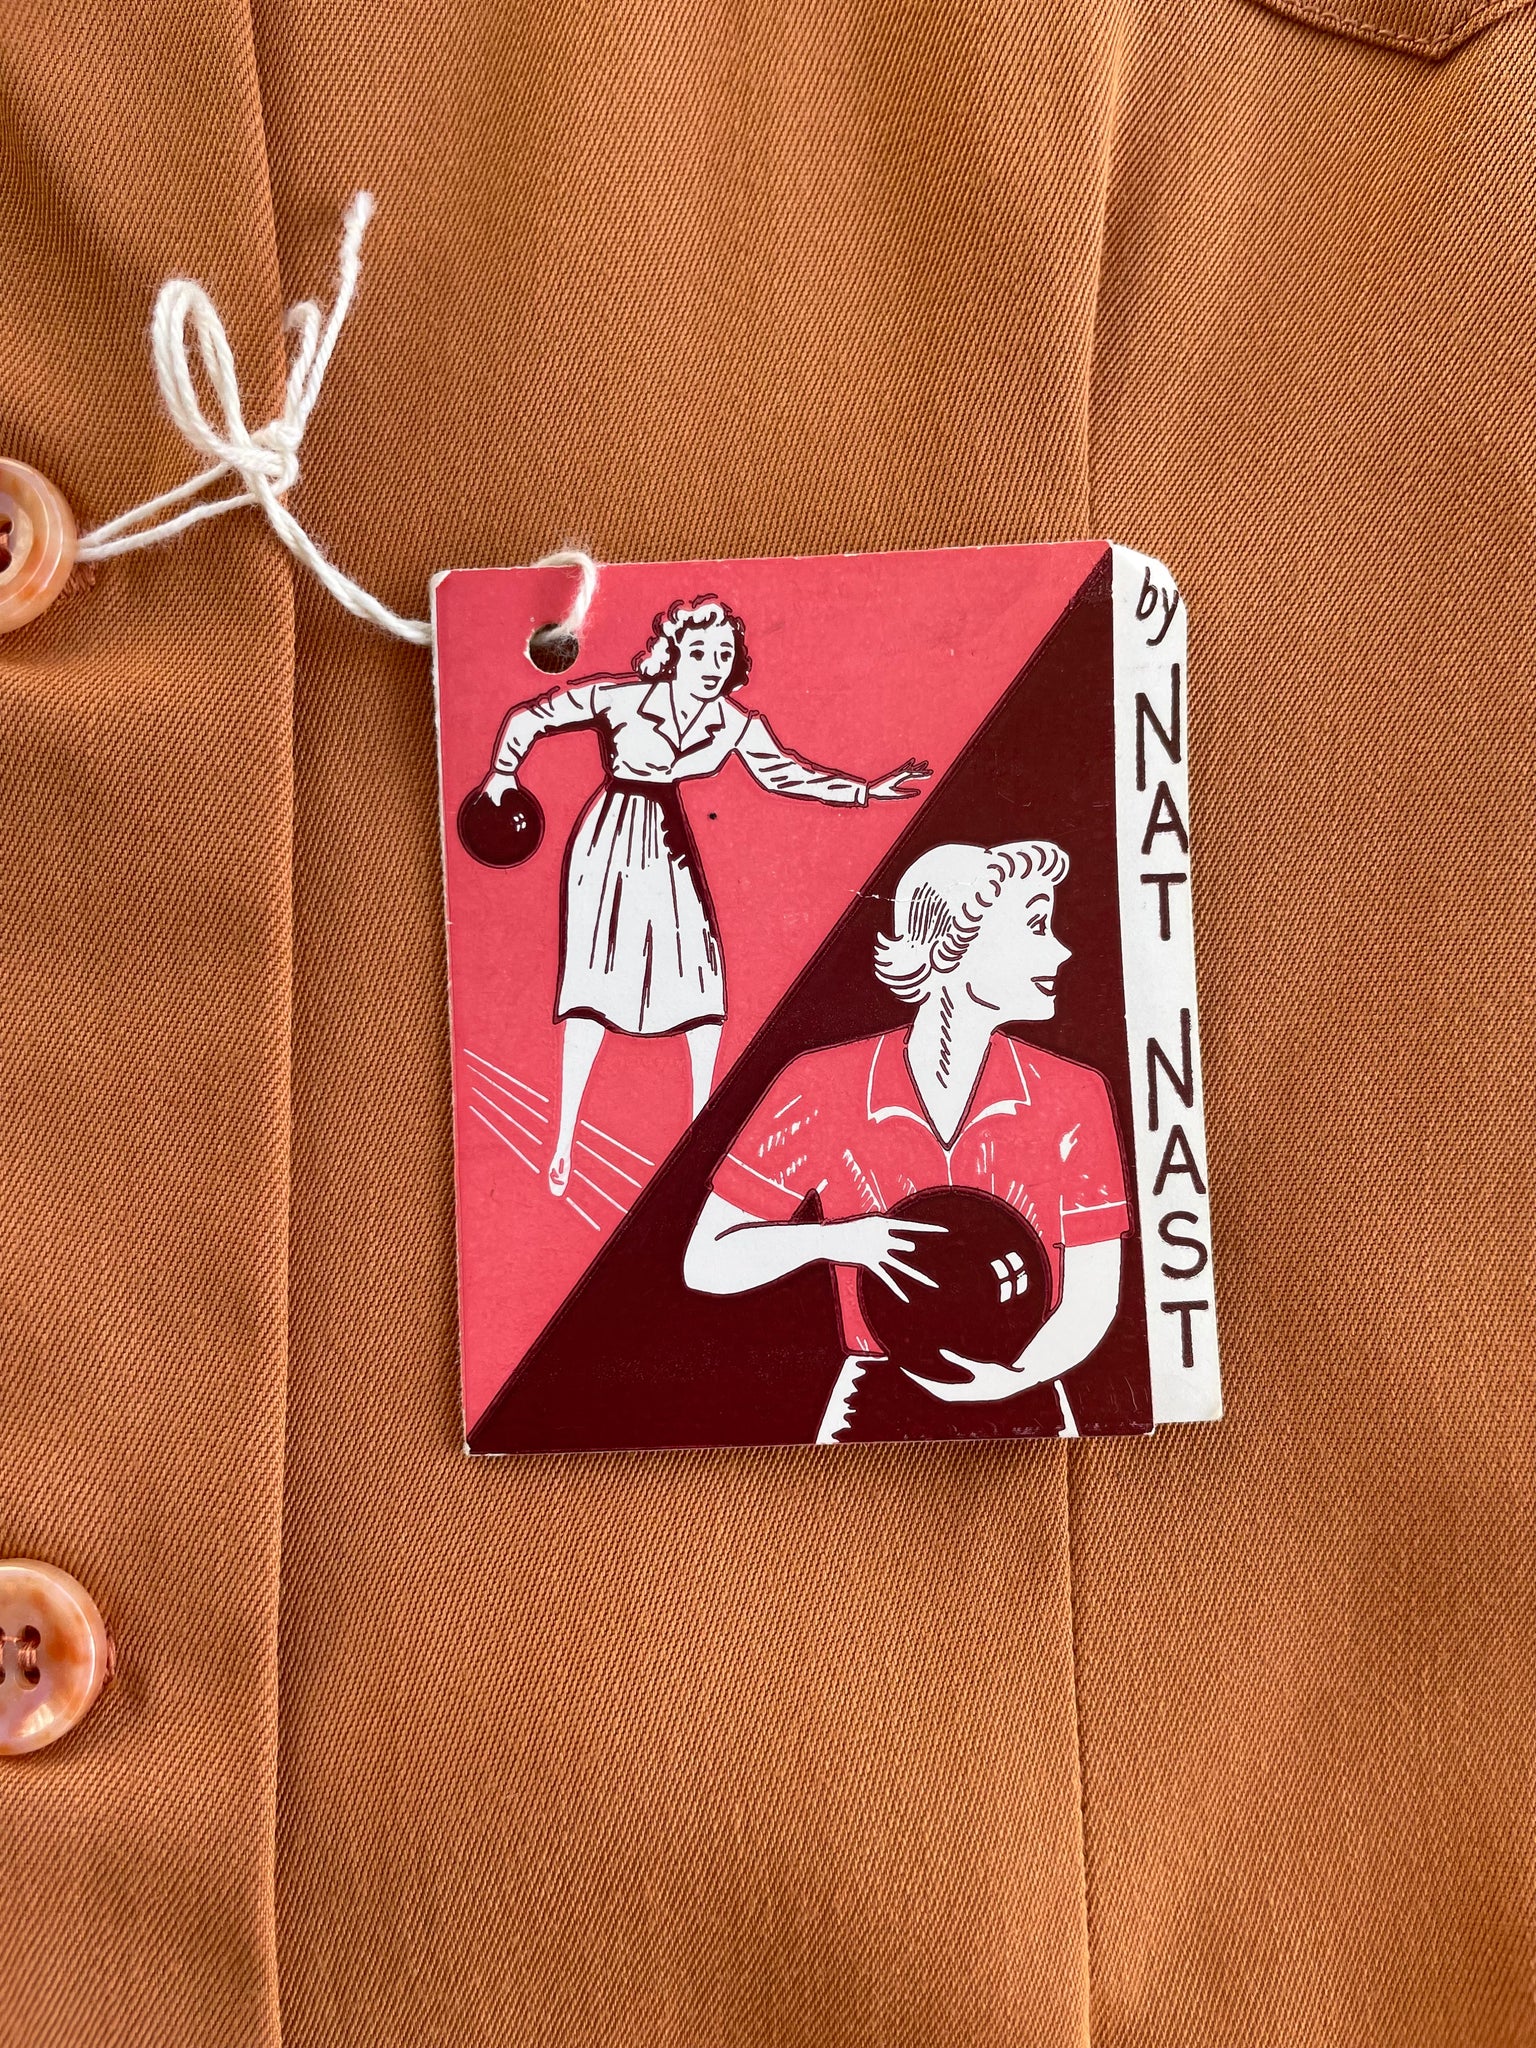 Rare Deadstock 1940s Terracotta Loop Collar Ladies Bowling Blouse